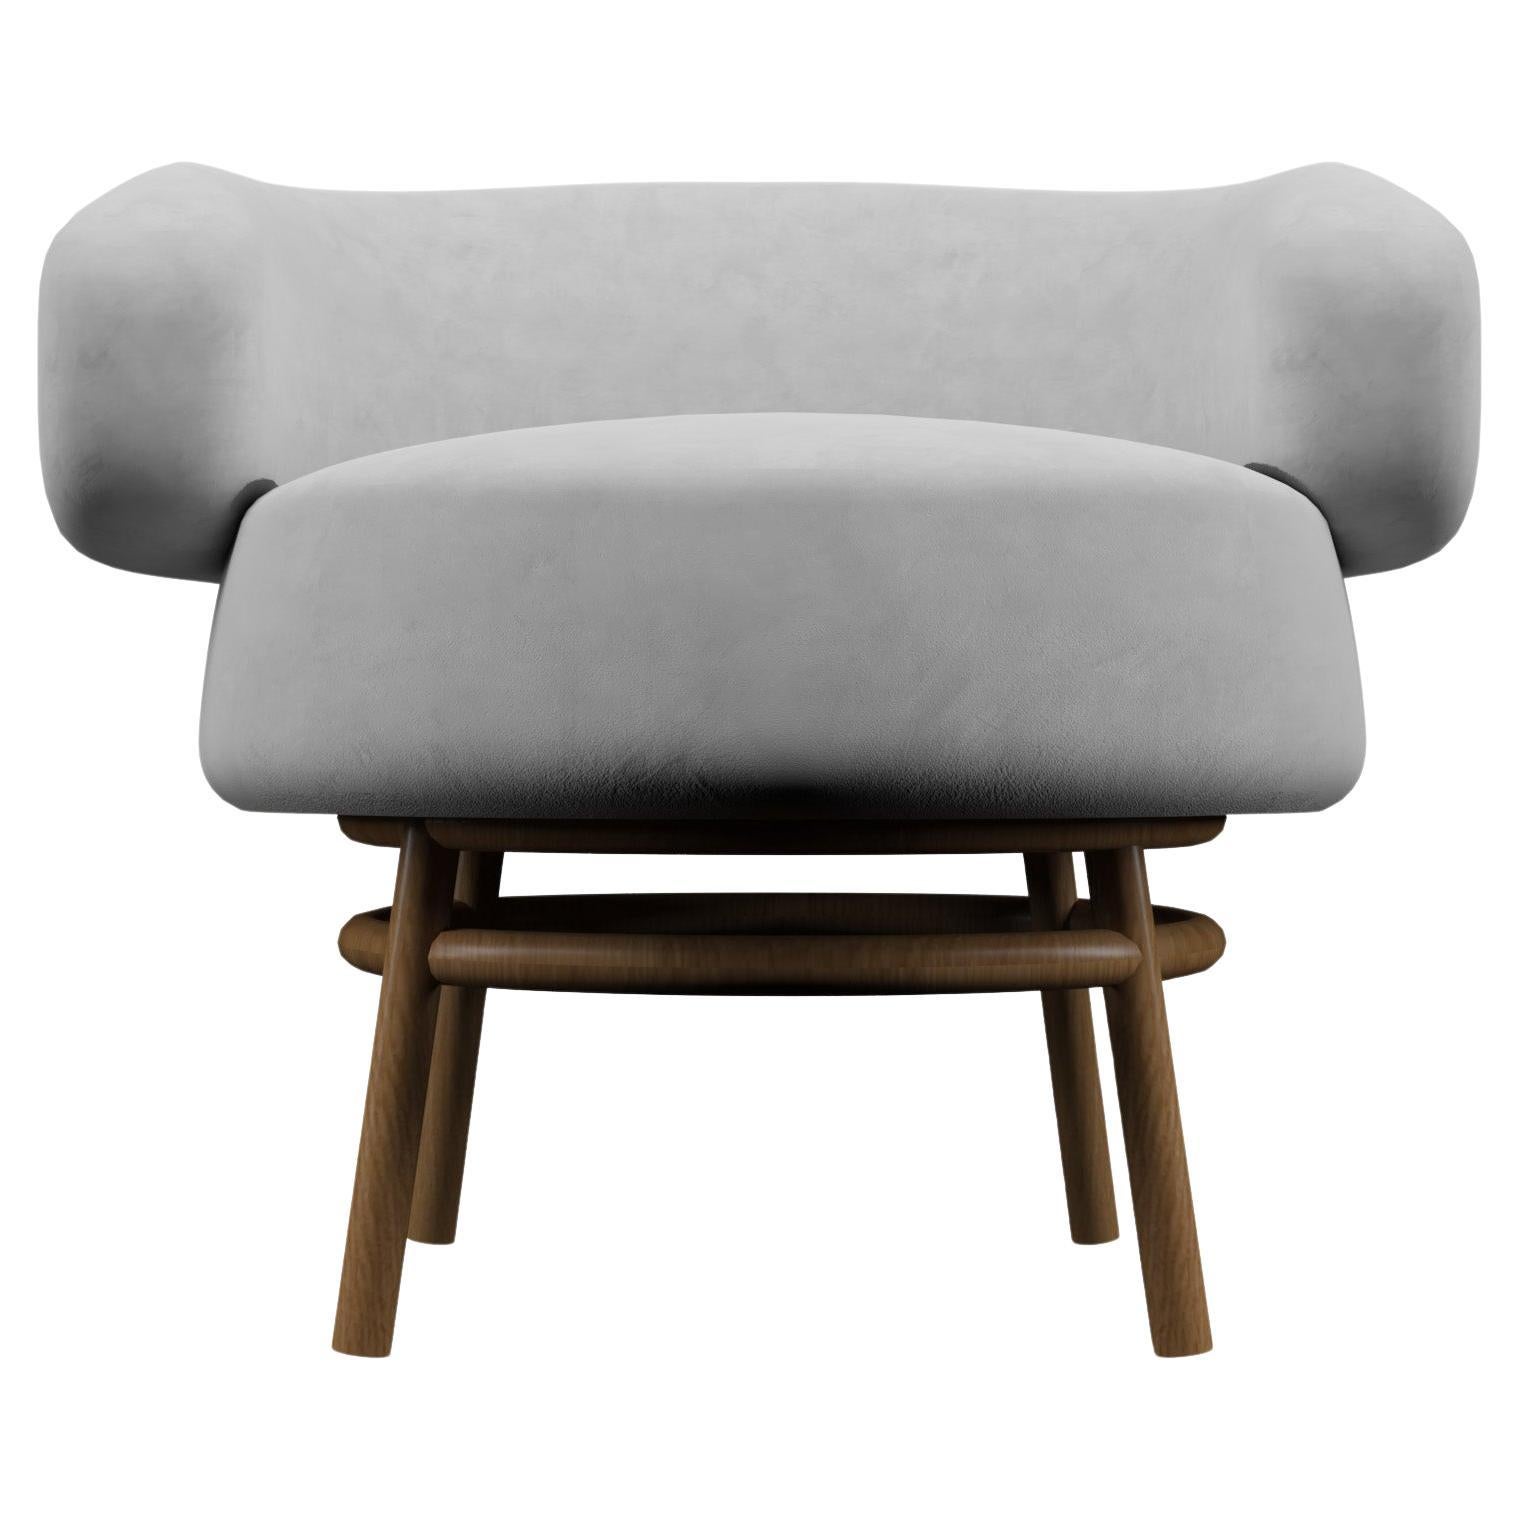 MIAMI Velvet Chair in Grey by Alexandre Ligios, REP by Tuleste Factory